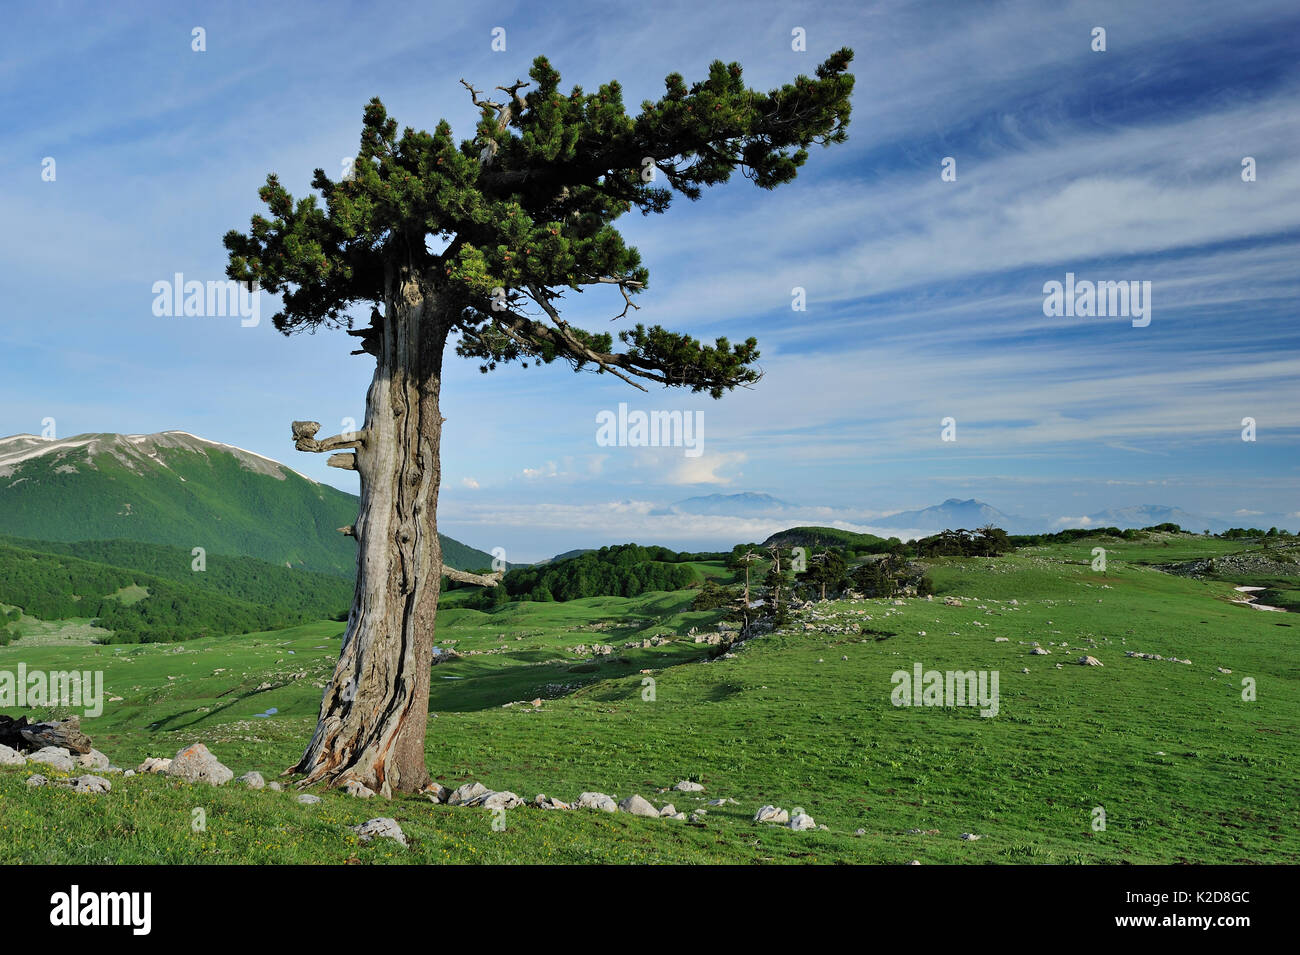 Cuirassed pine tree (Pinus leucodermis), Pollino National Park, Italy. May 2009. Stock Photo